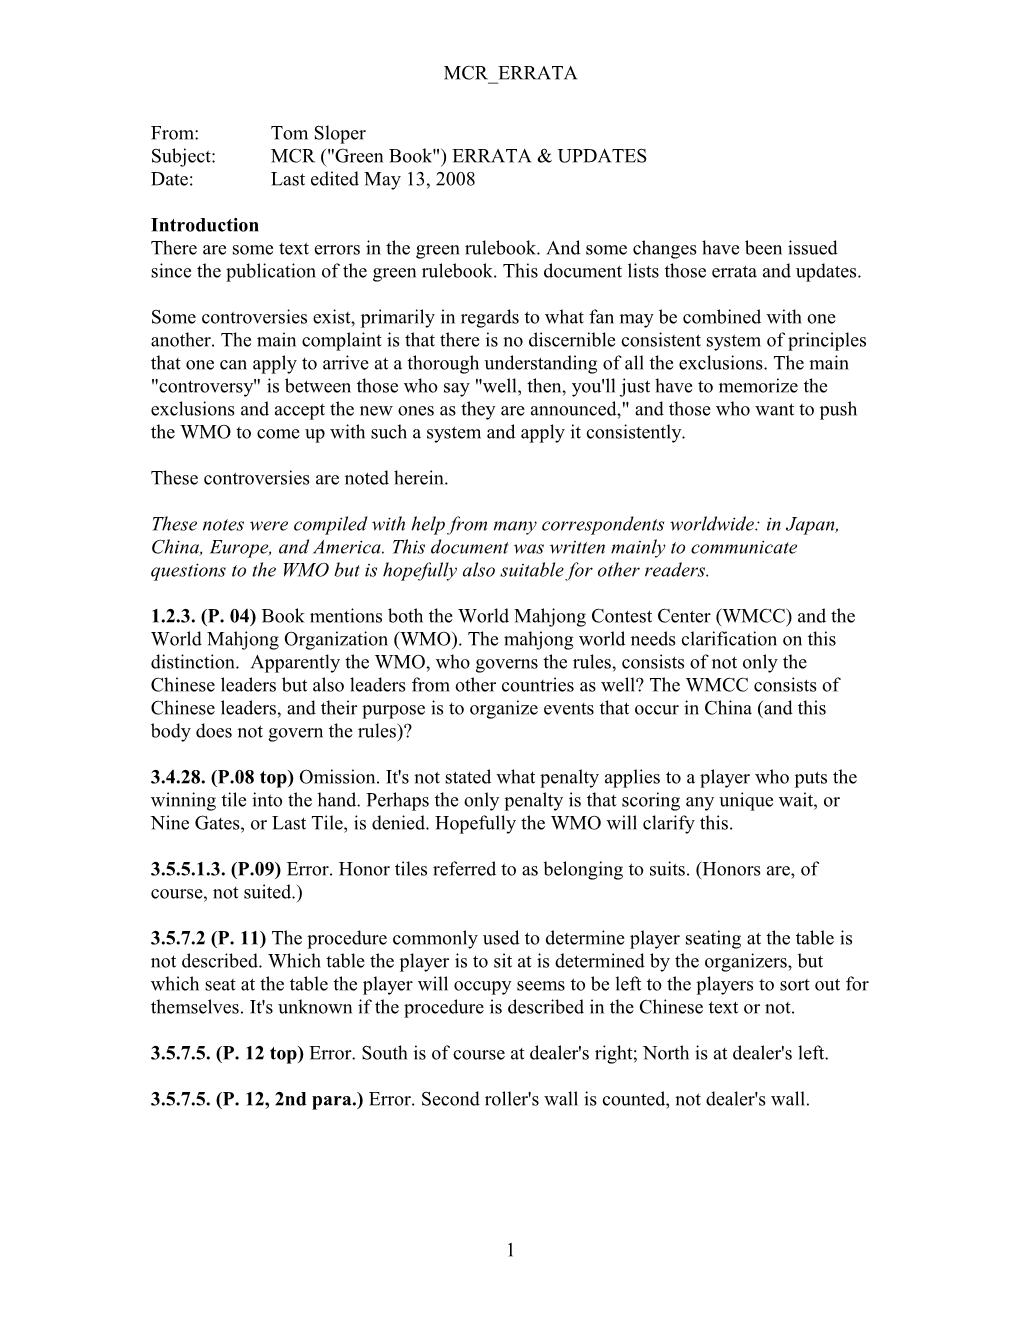 Subject:MCR ( Green Book ) ERRATA & UPDATES